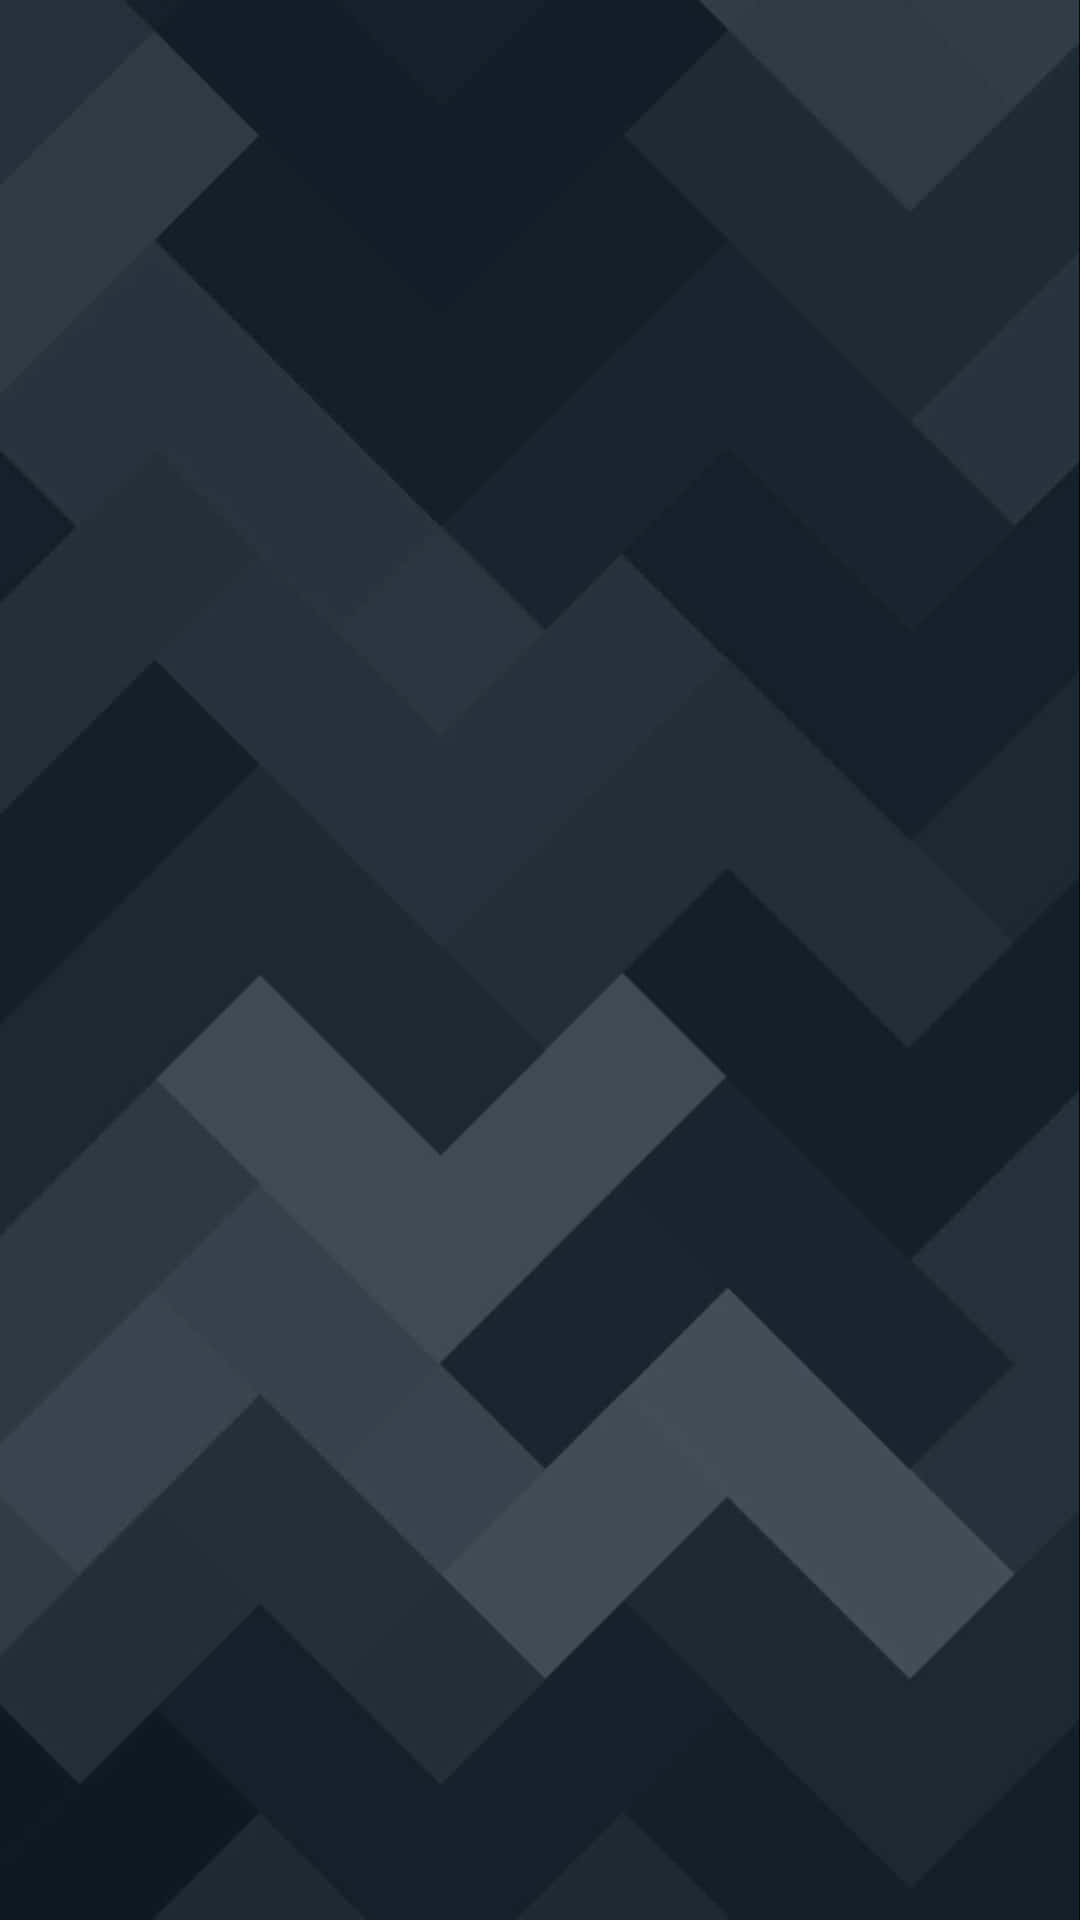 Simple Black Geometric Pattern iPhone Wallpaper